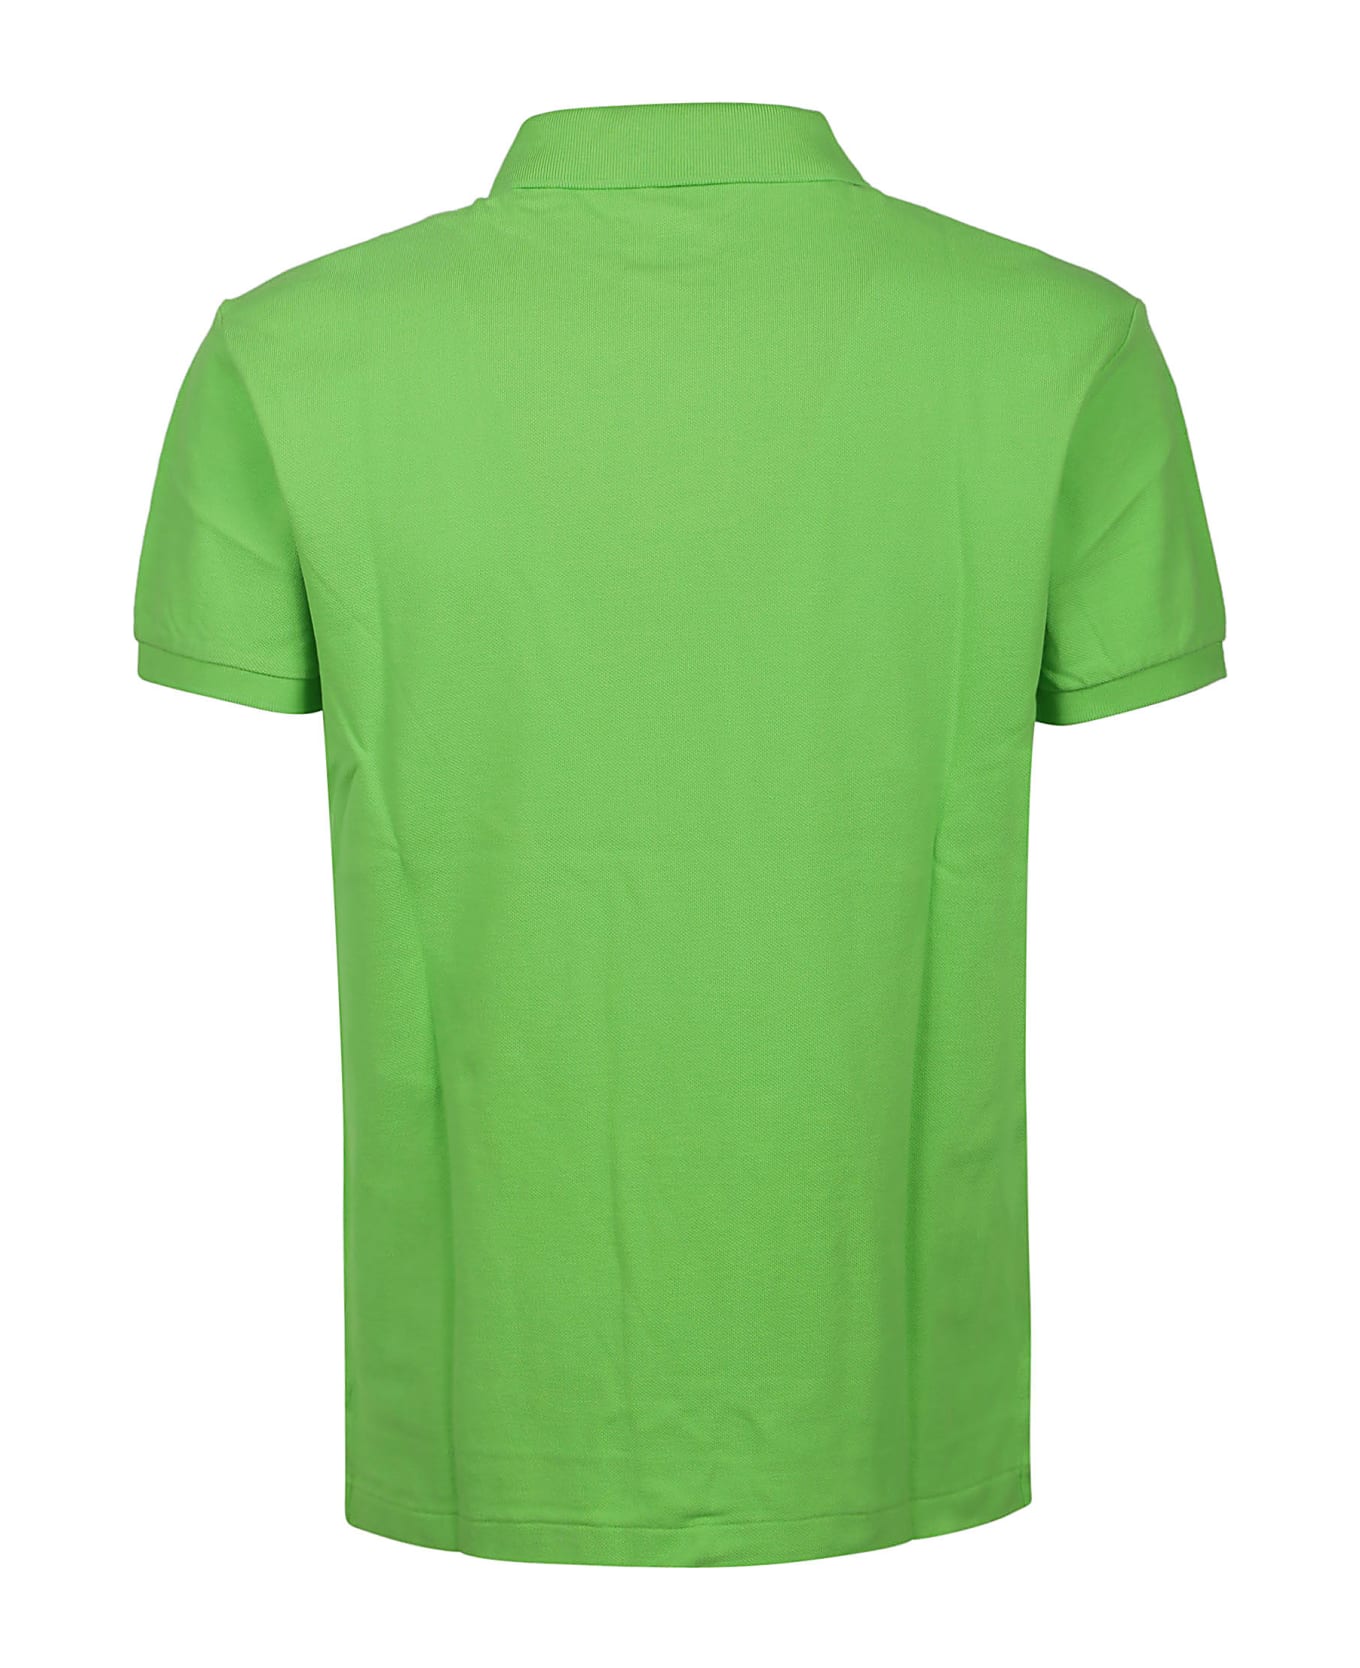 Polo Ralph Lauren Short Sleeve Polo Shirt - Galaxy Green ポロシャツ